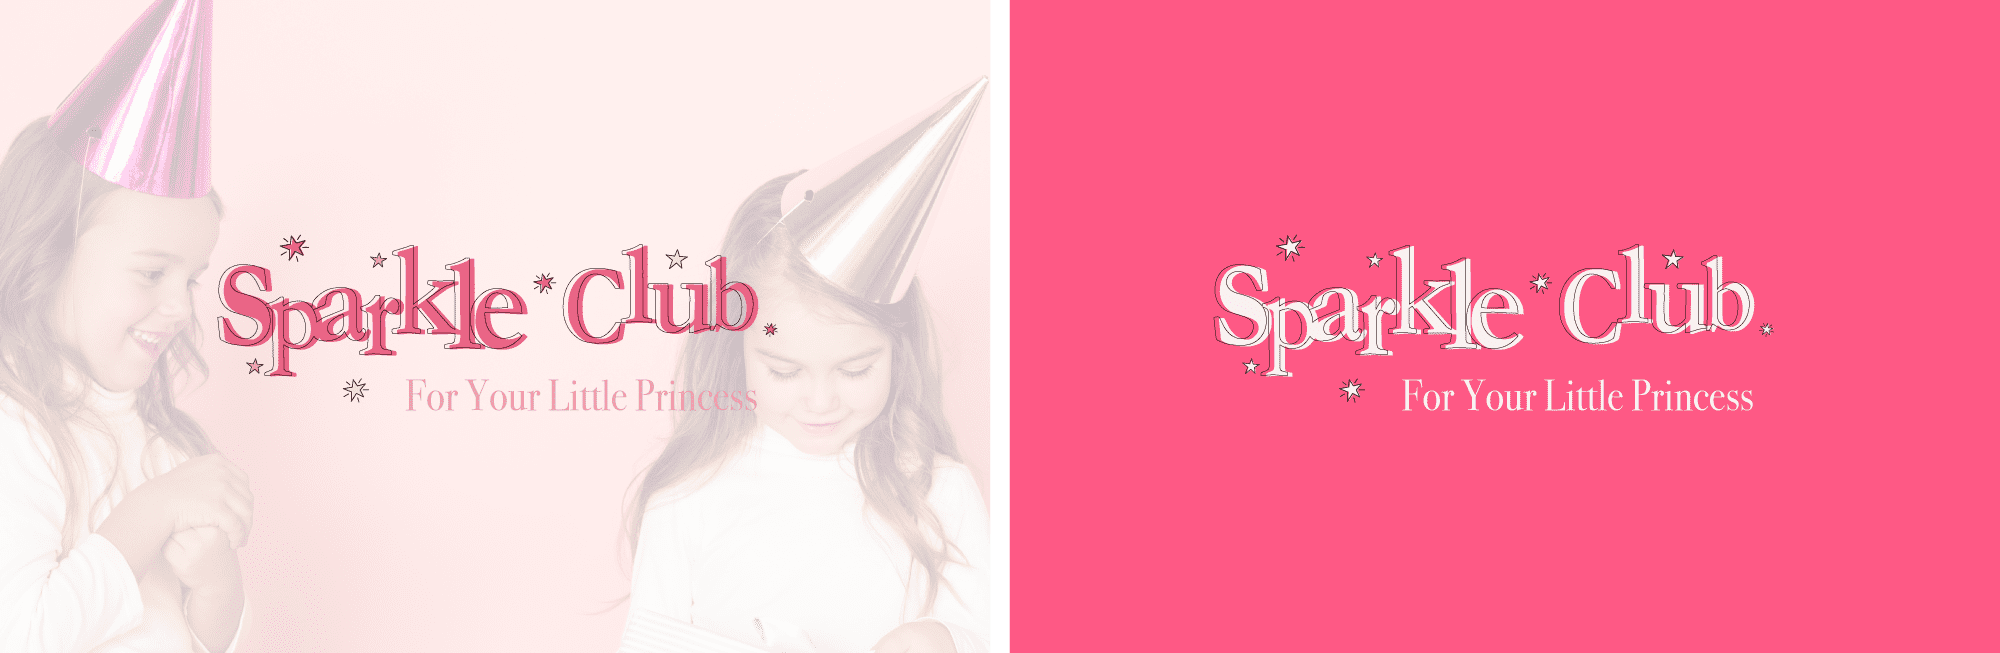 The Sparkle Club - Branding